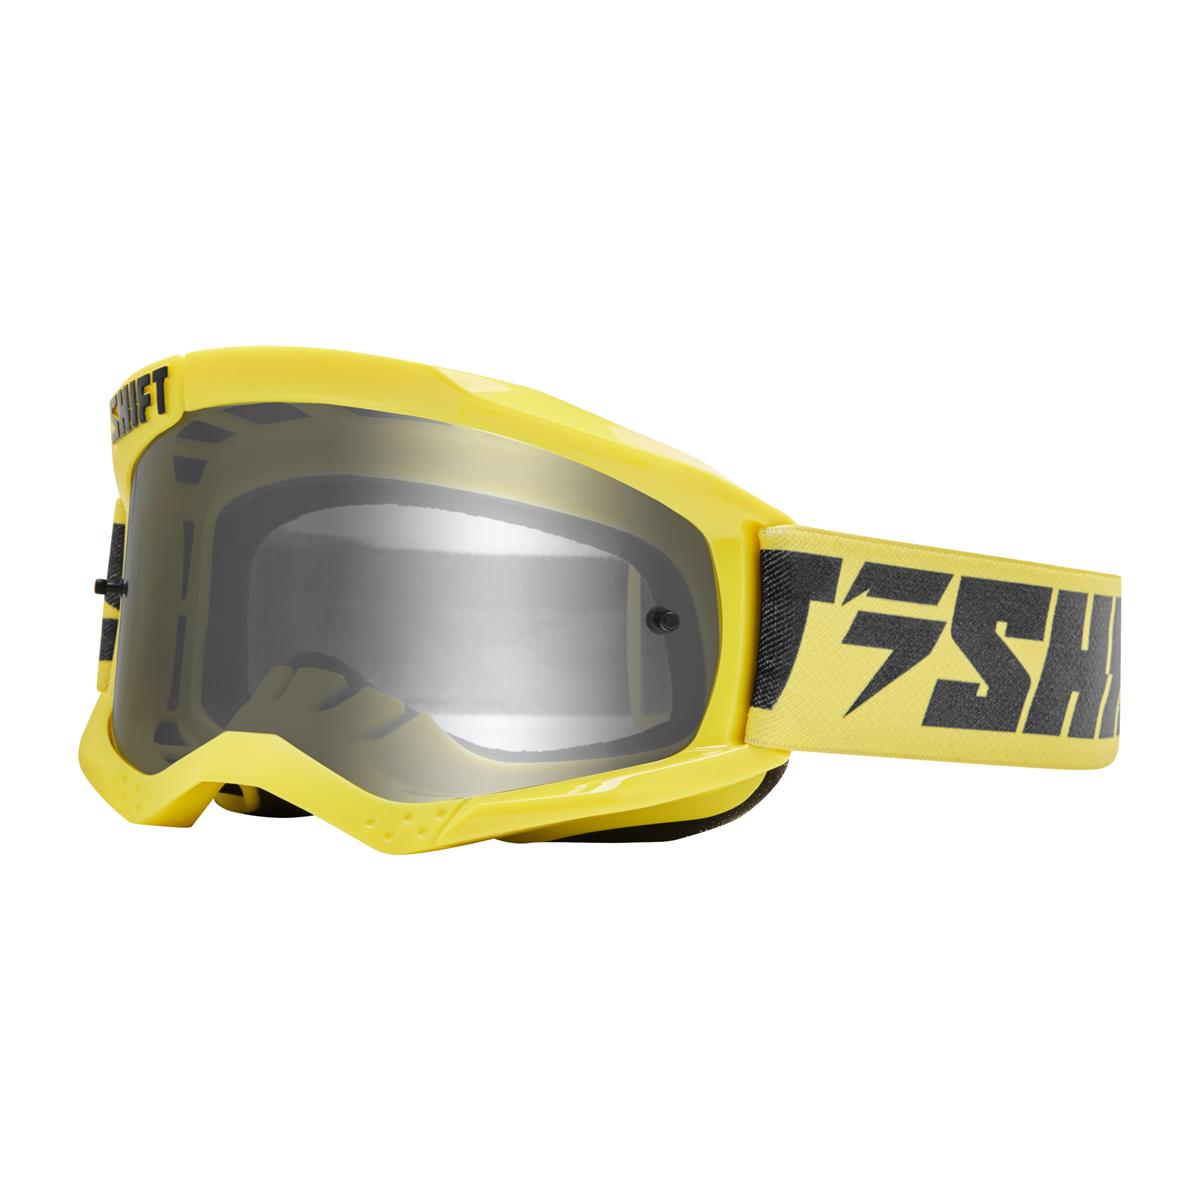 Shift Goggle Whit3 Label Yellow/Navy - Anti-Fog